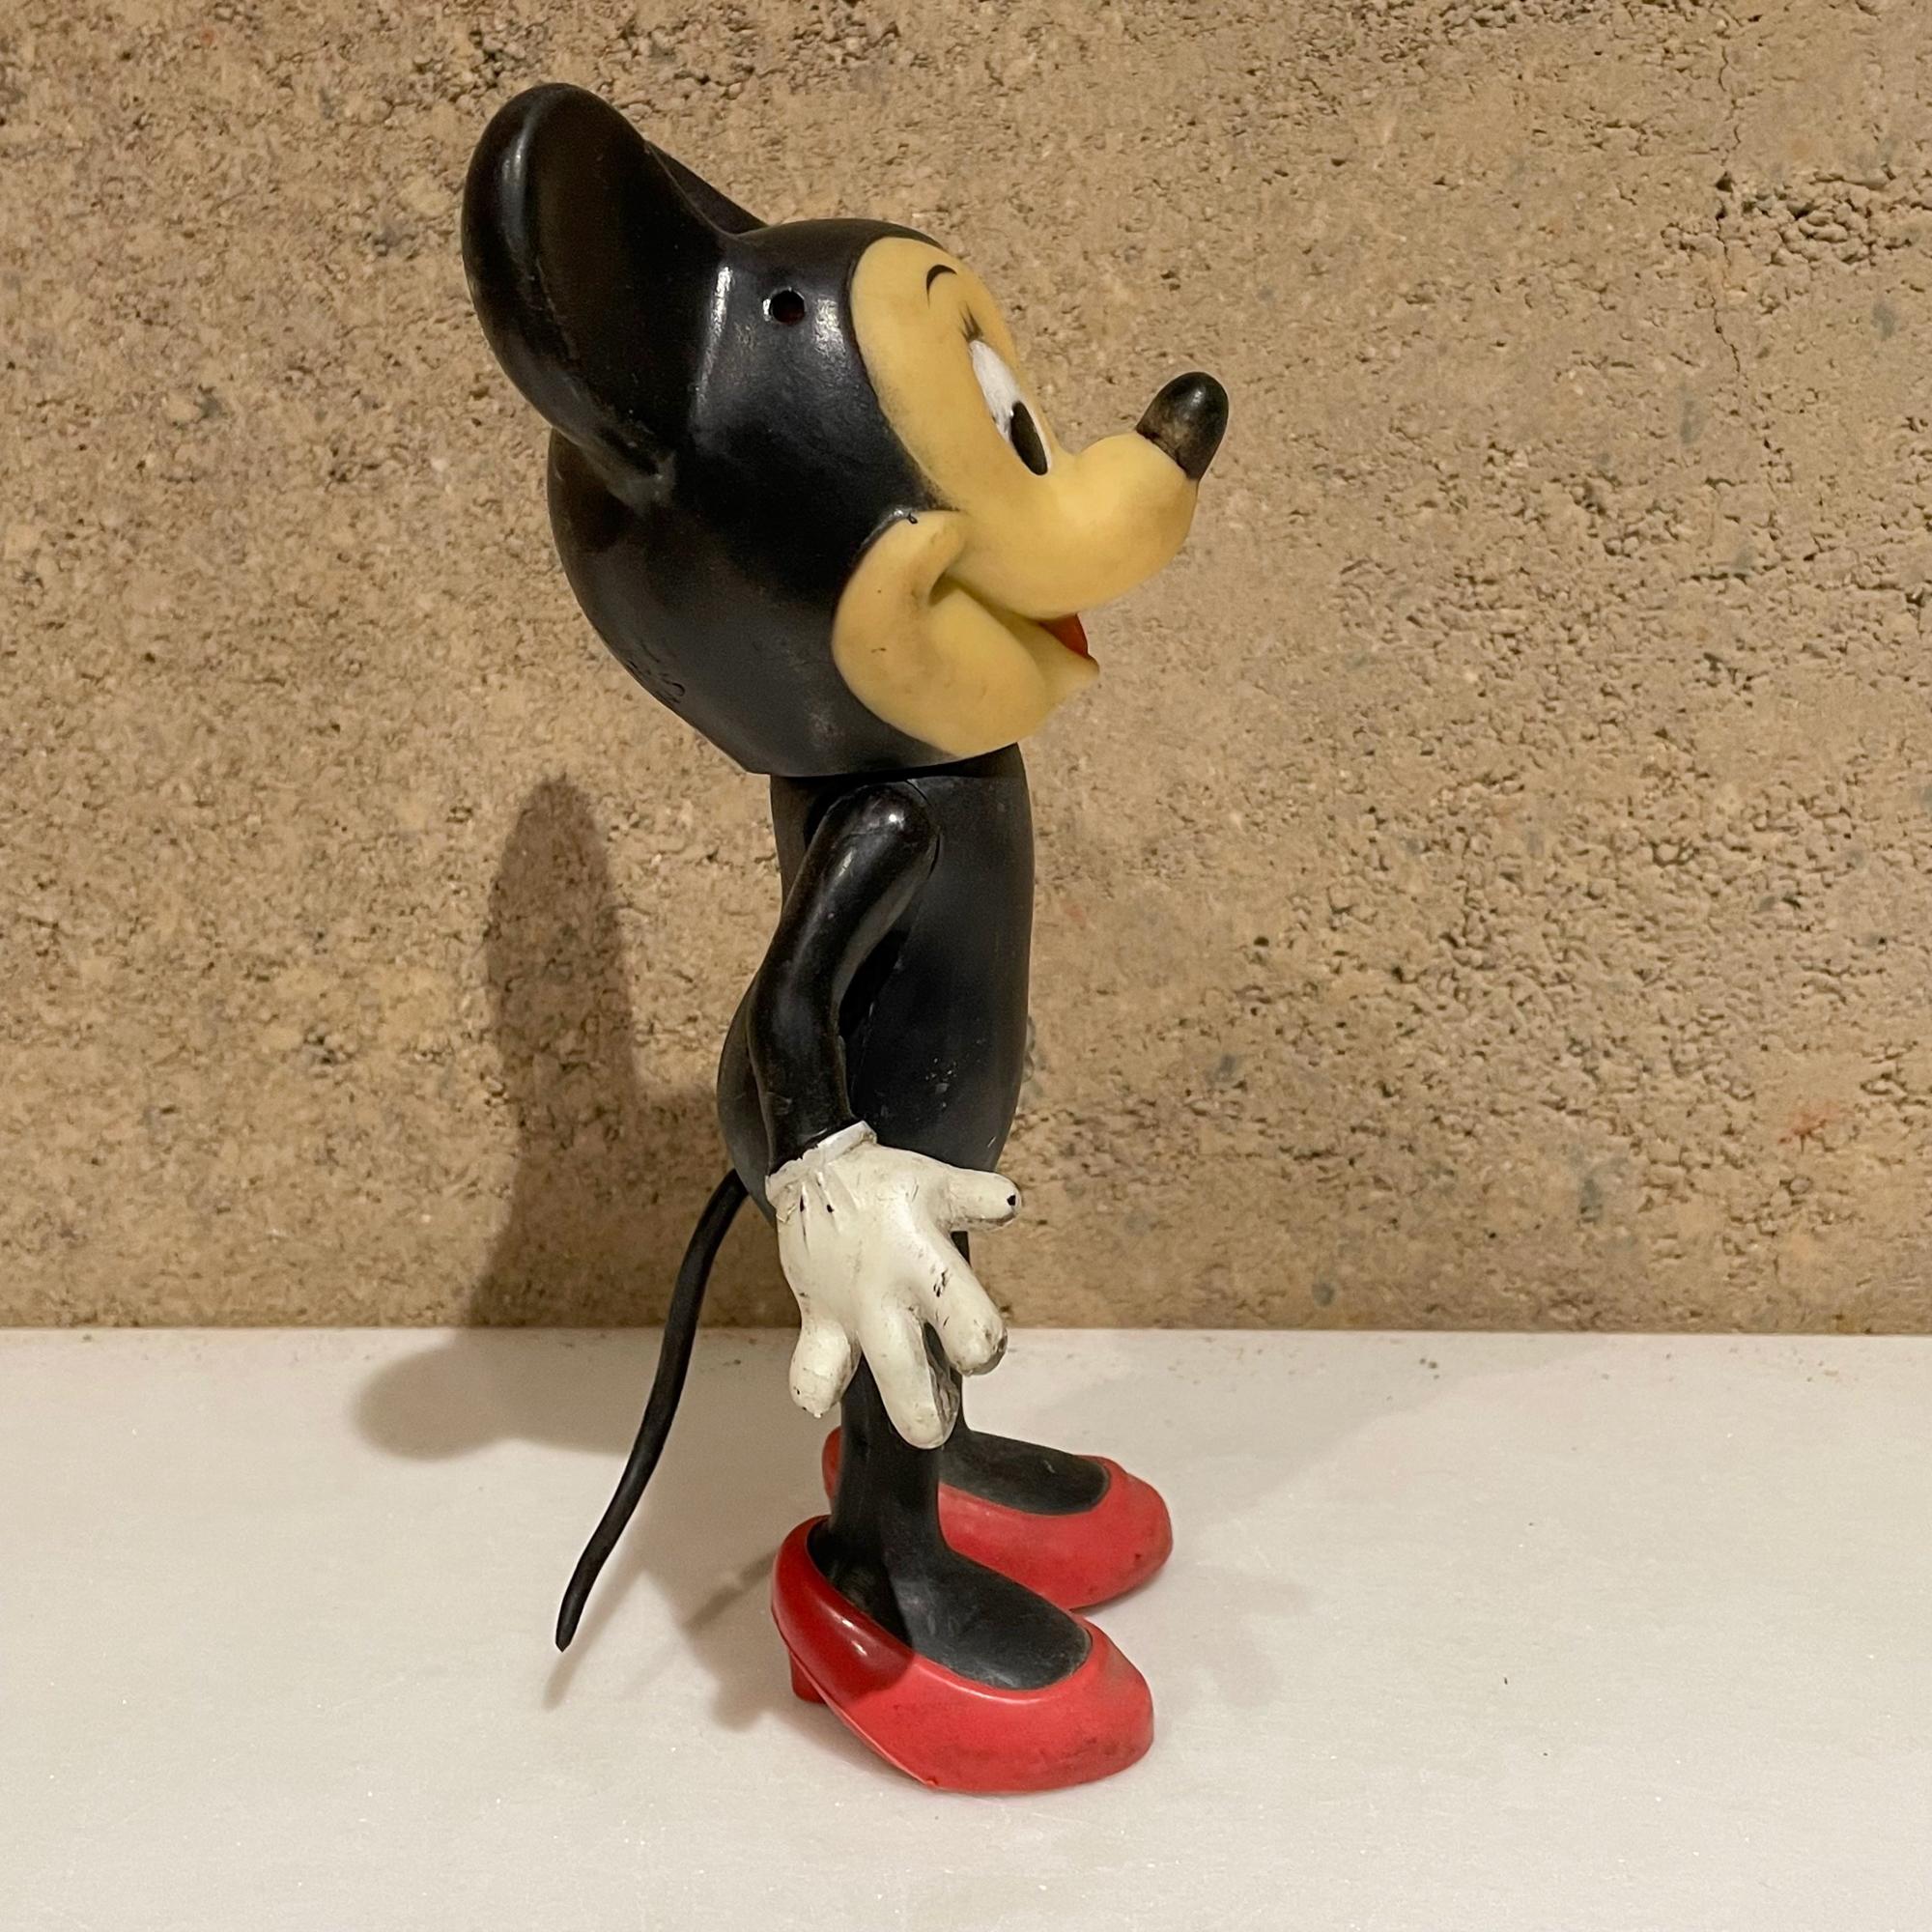 American Adorable Vintage Minnie Mouse Figure by Walt Disney R Dakin & Co Hong Kong 1960s